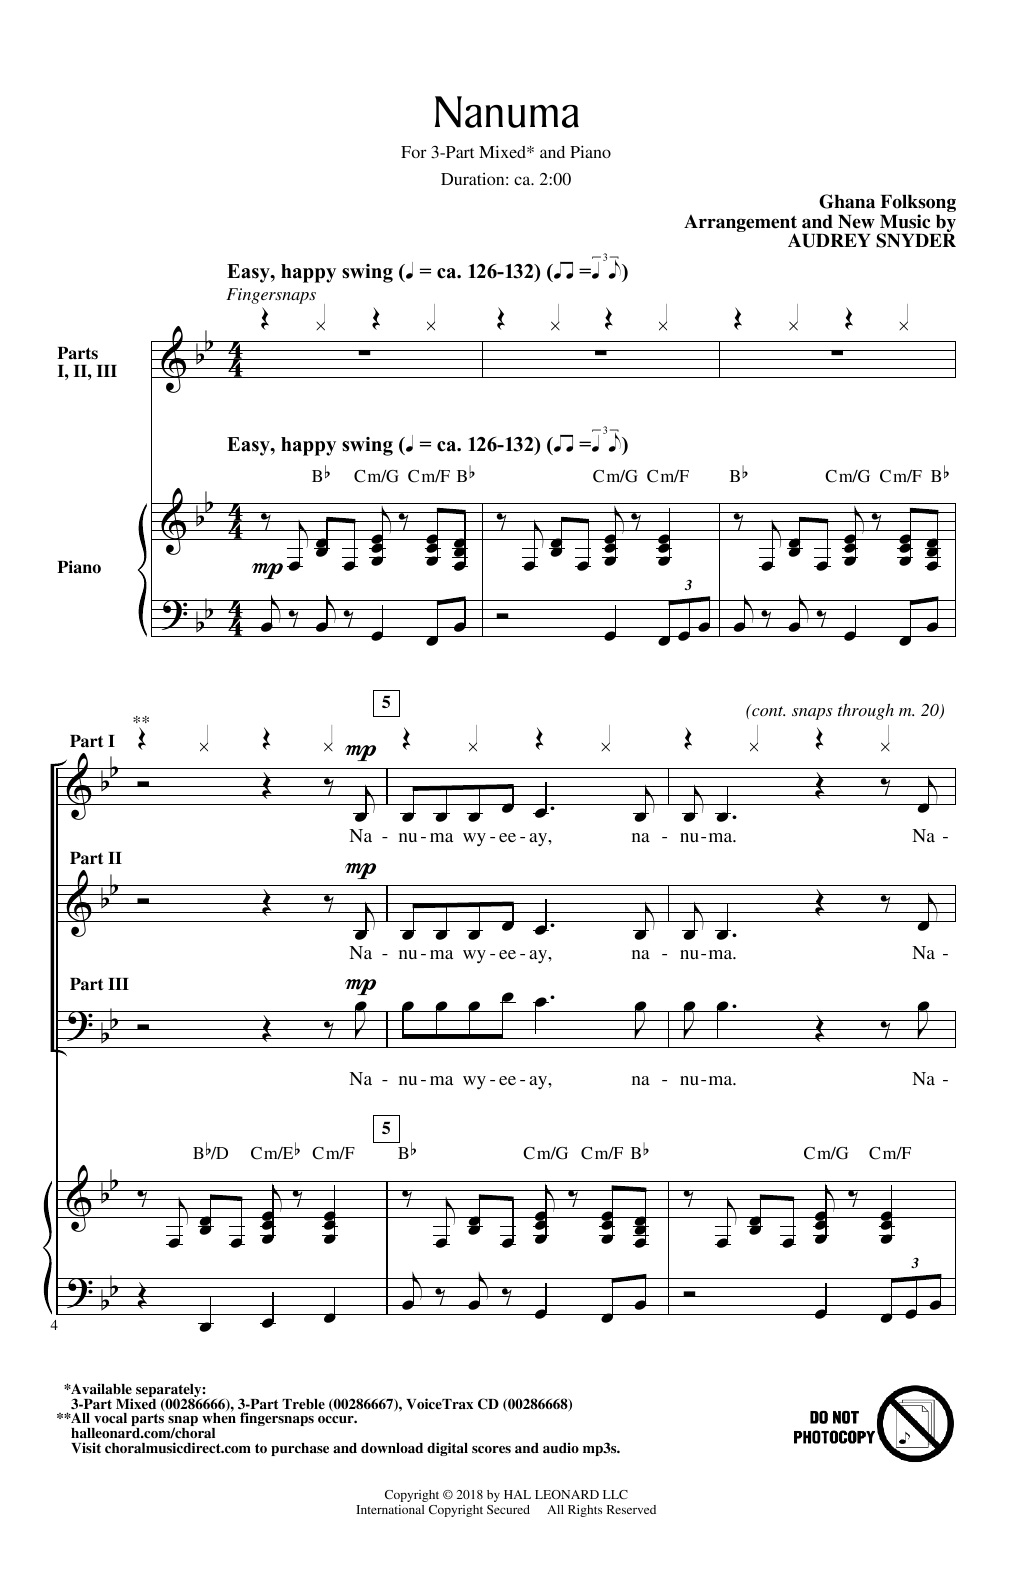 Audrey Snyder Nanuma Sheet Music Notes & Chords for 3-Part Mixed Choir - Download or Print PDF